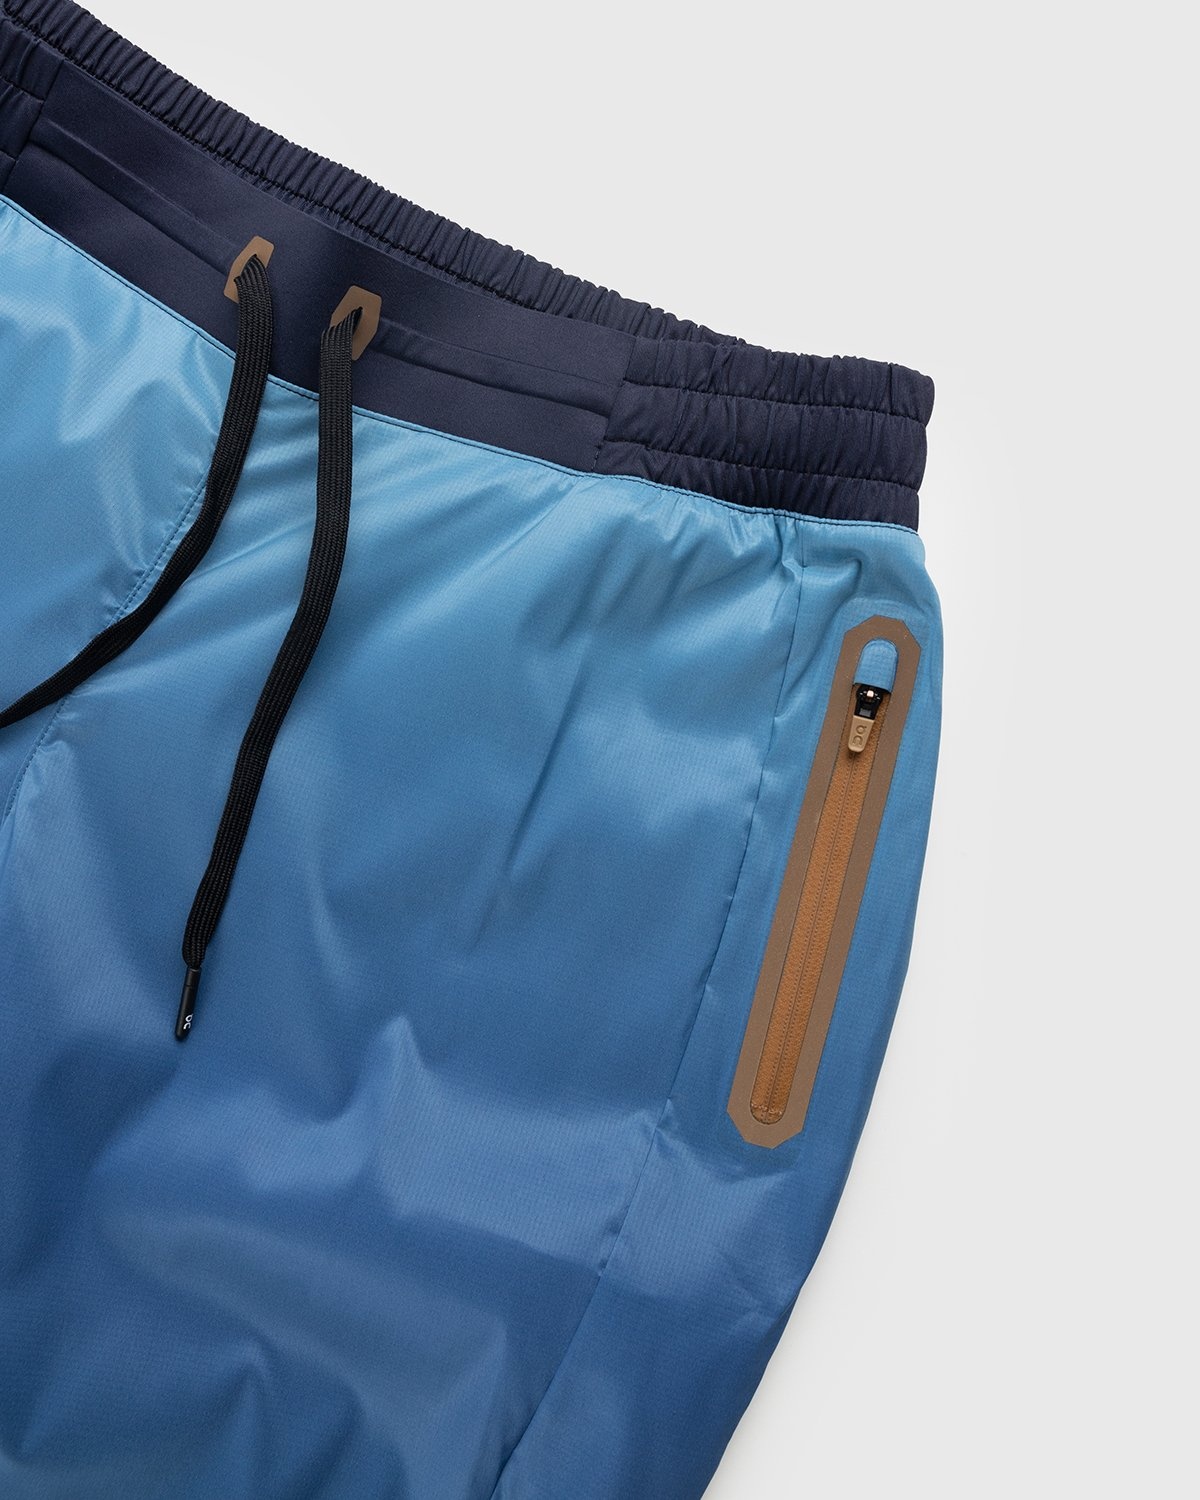 Loewe x On – Women's Technical Running Pants Gradient Blue - Active Pants - Blue - Image 5